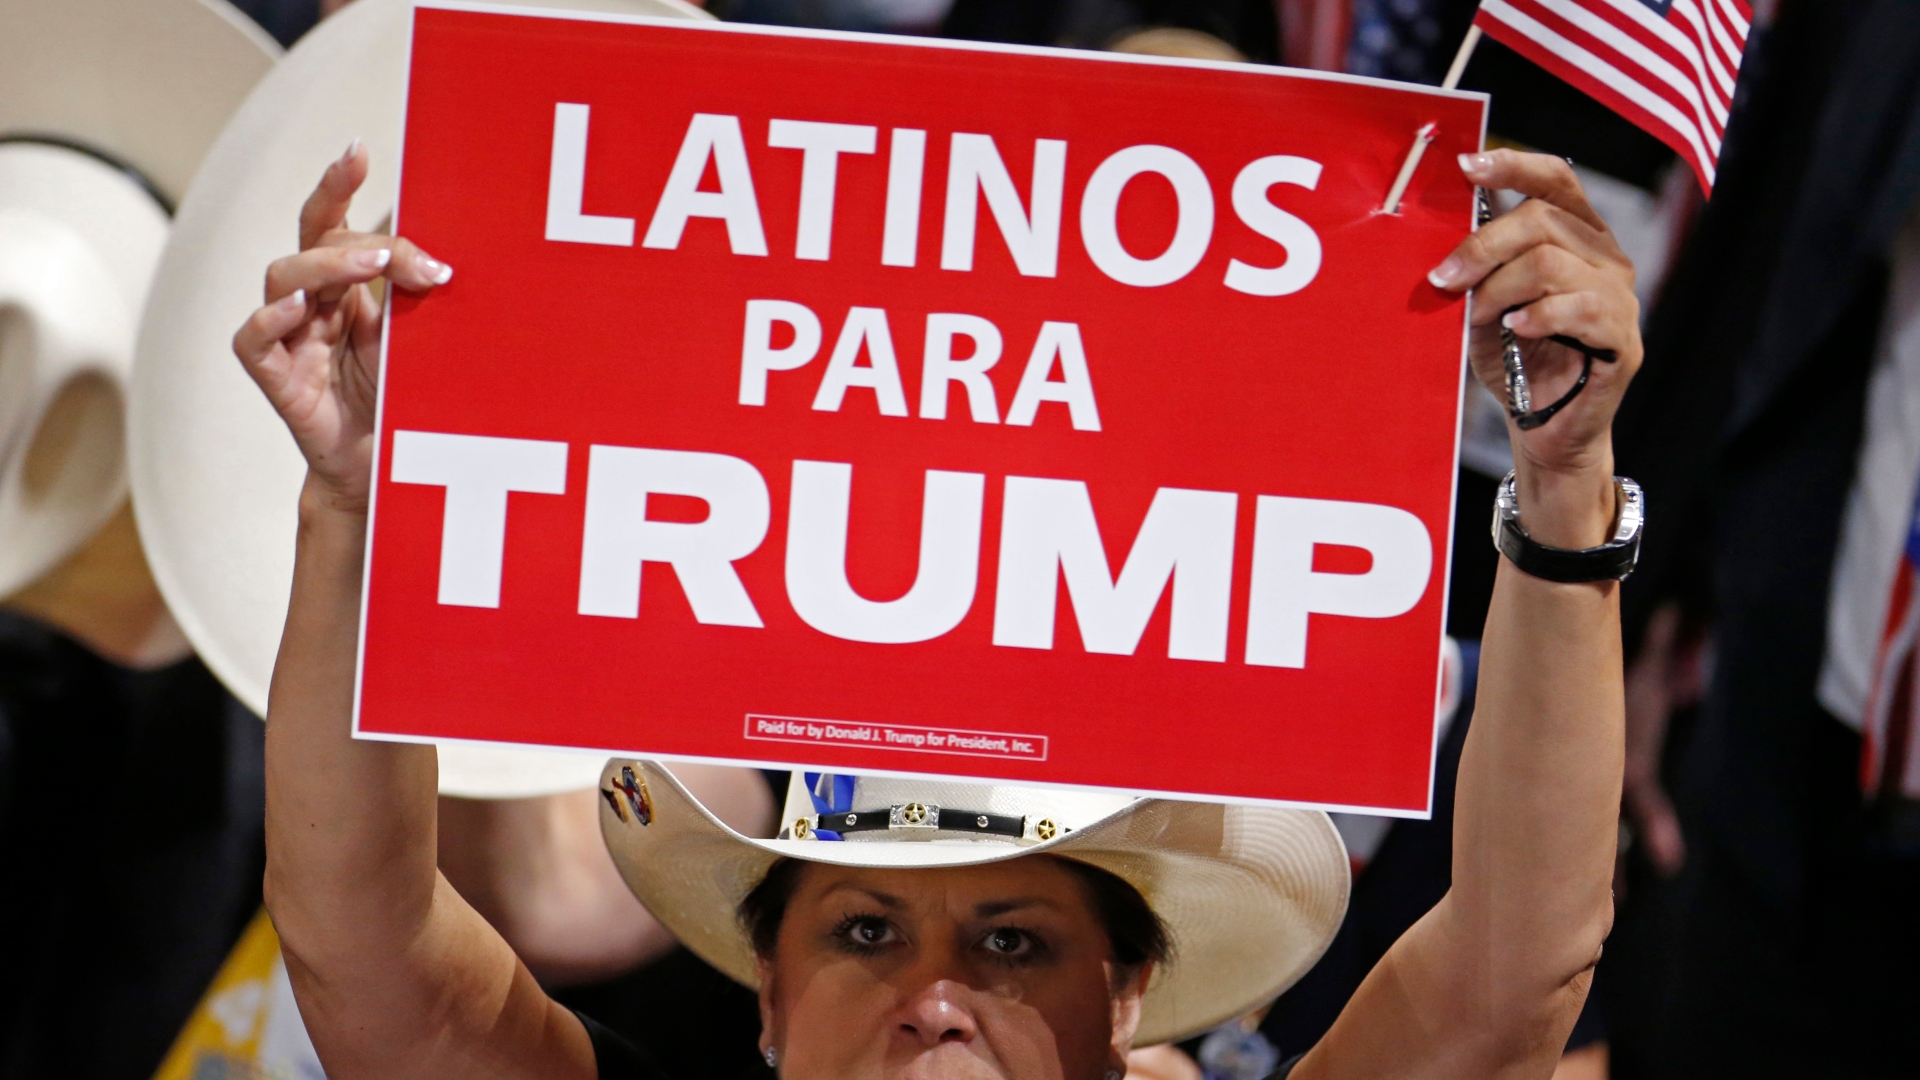 Hispanic Lives Matter Wallpapers